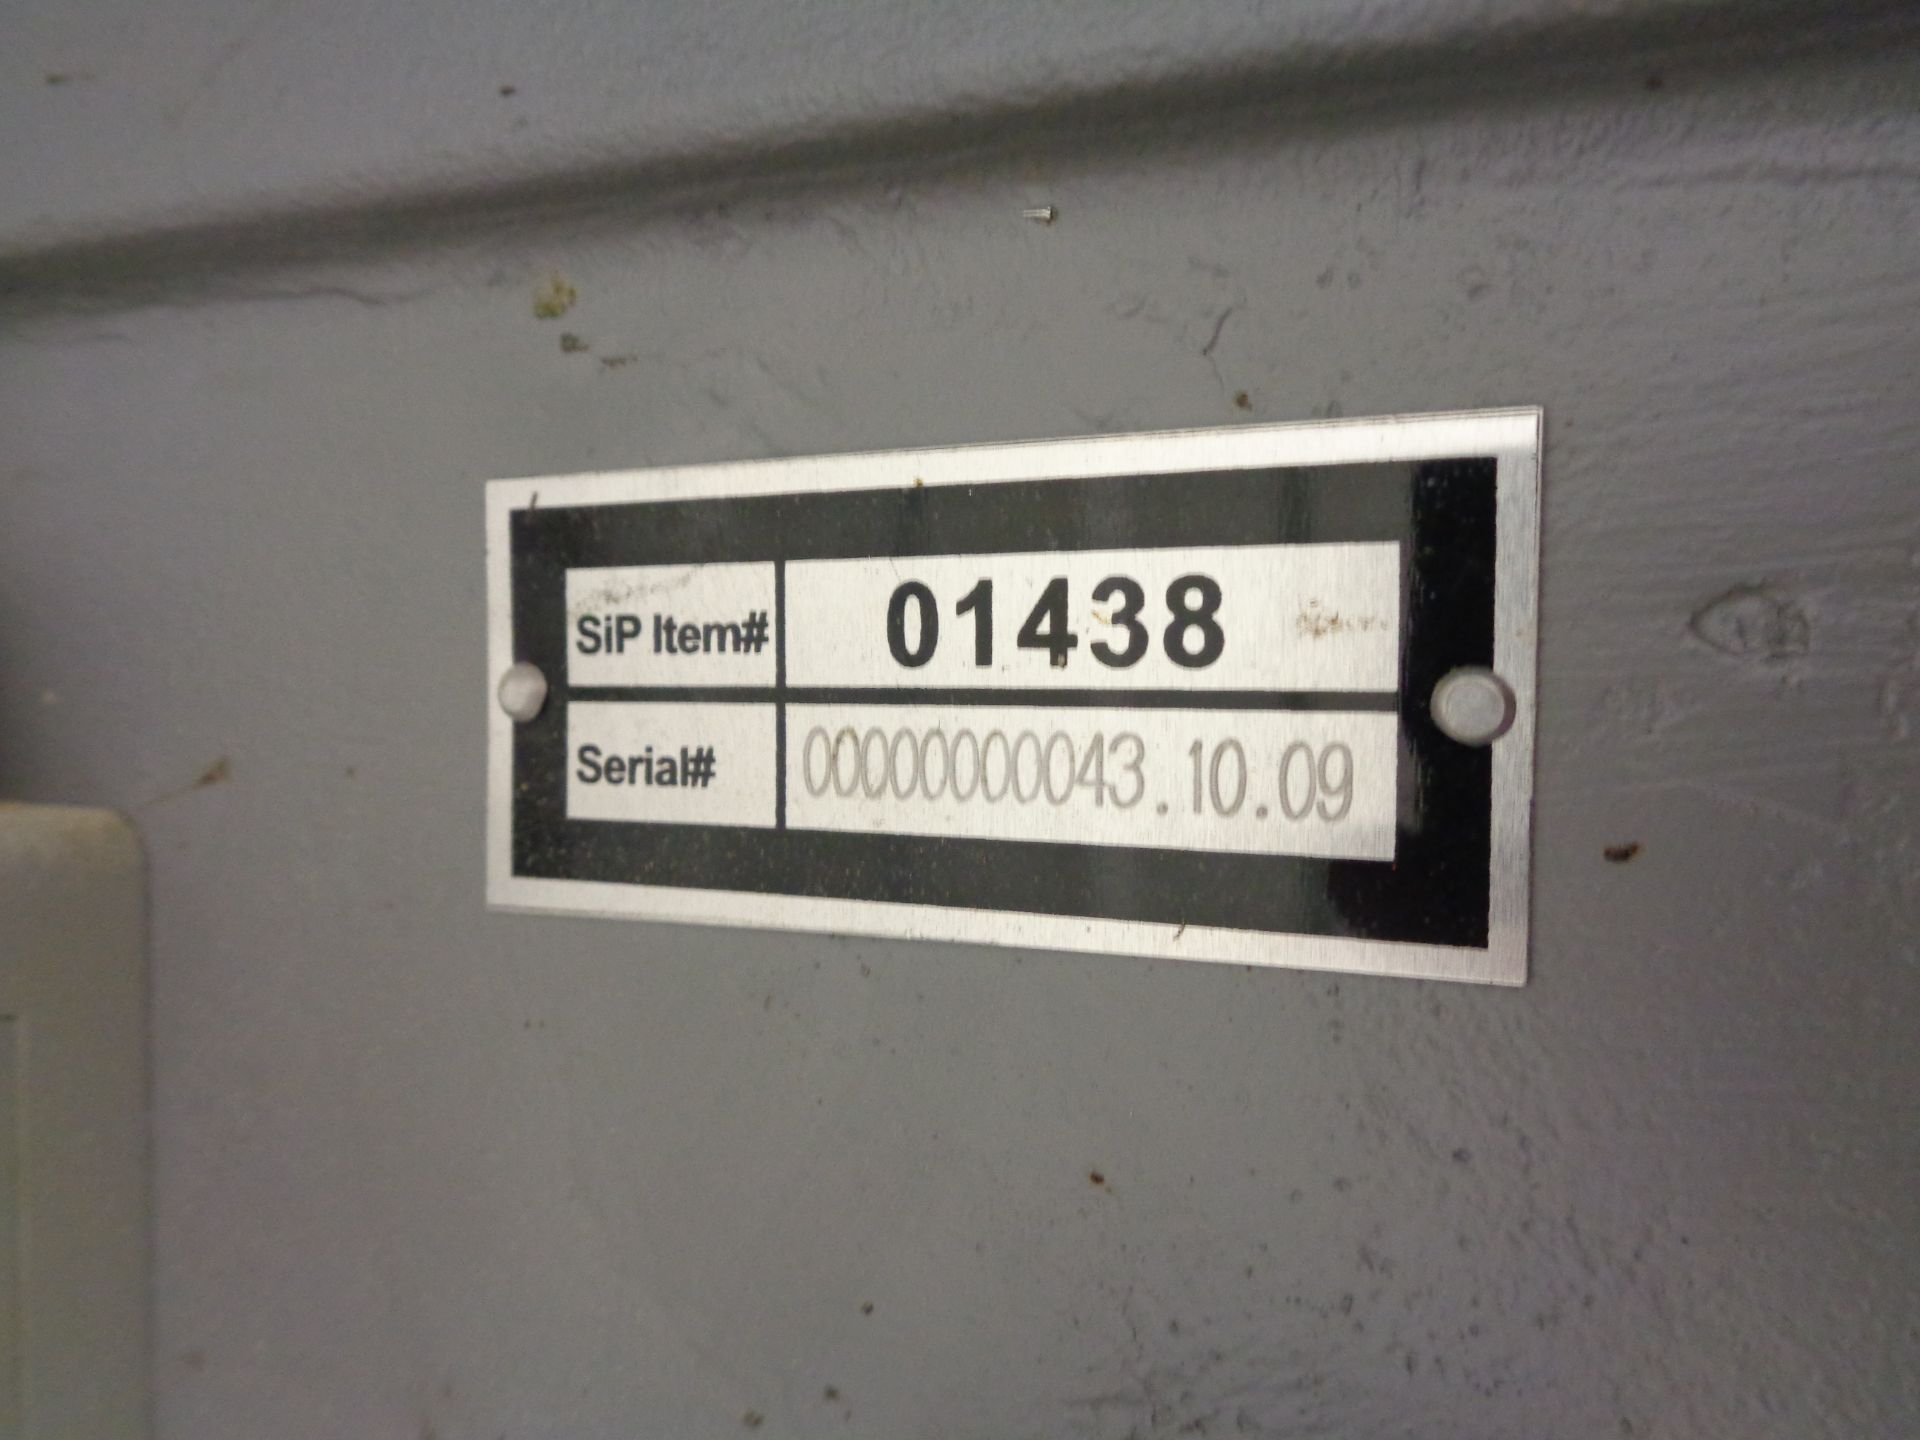 Sip 01438 32mm drill press, serial no. 43.10.09 - Image 3 of 4